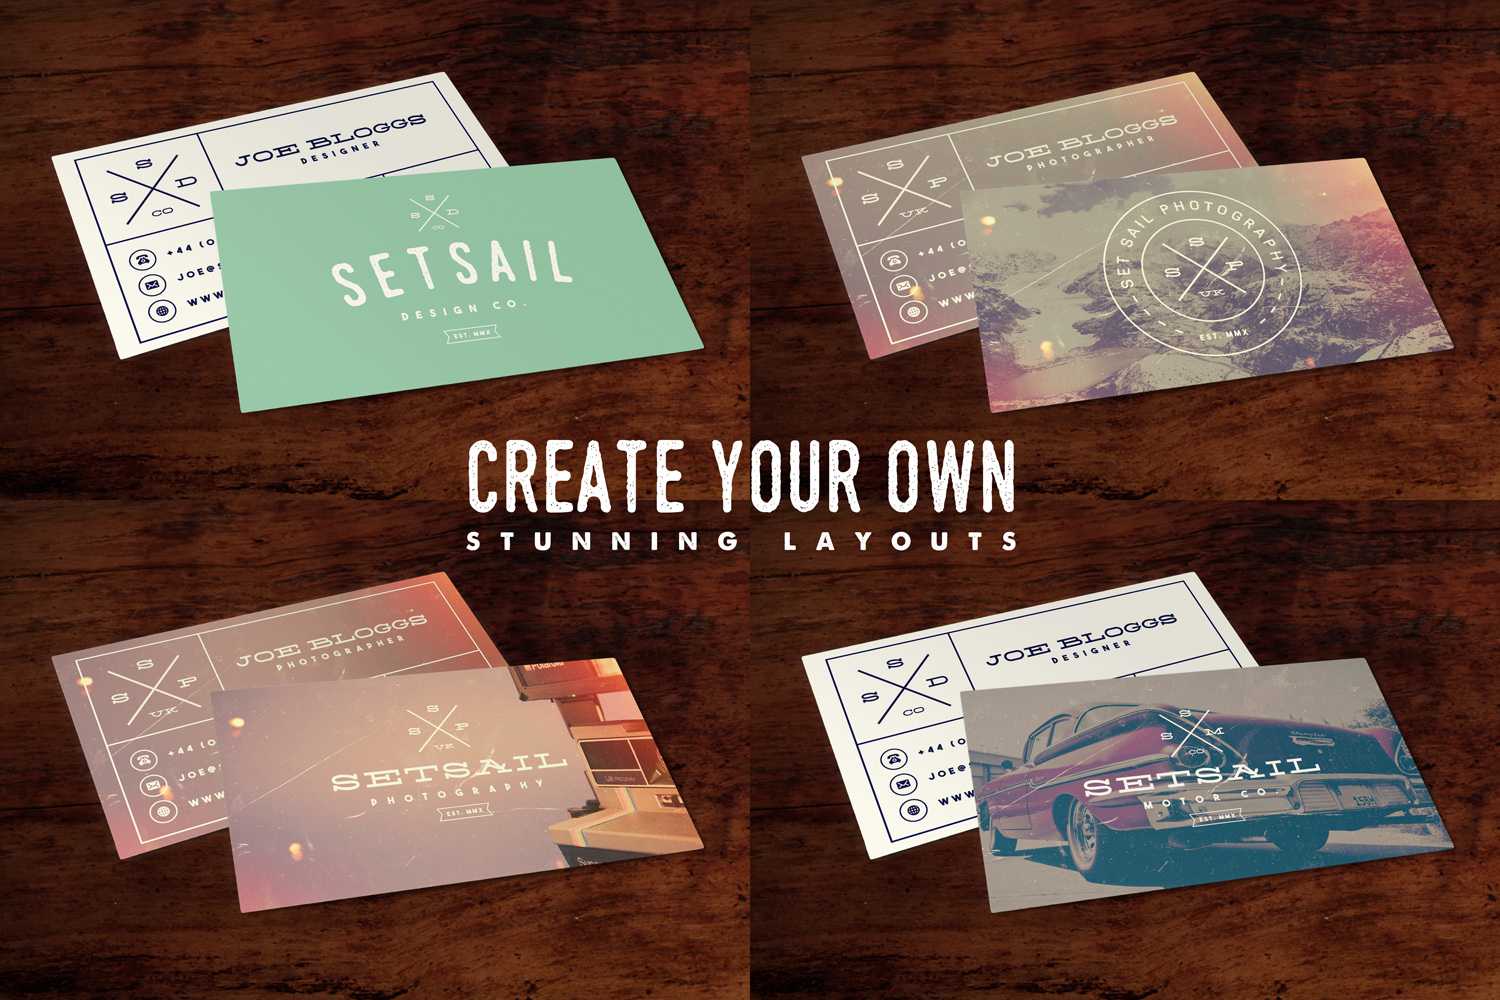 Set Sail Studios Vintage Business Card Template Within Staples Business Card Template Word